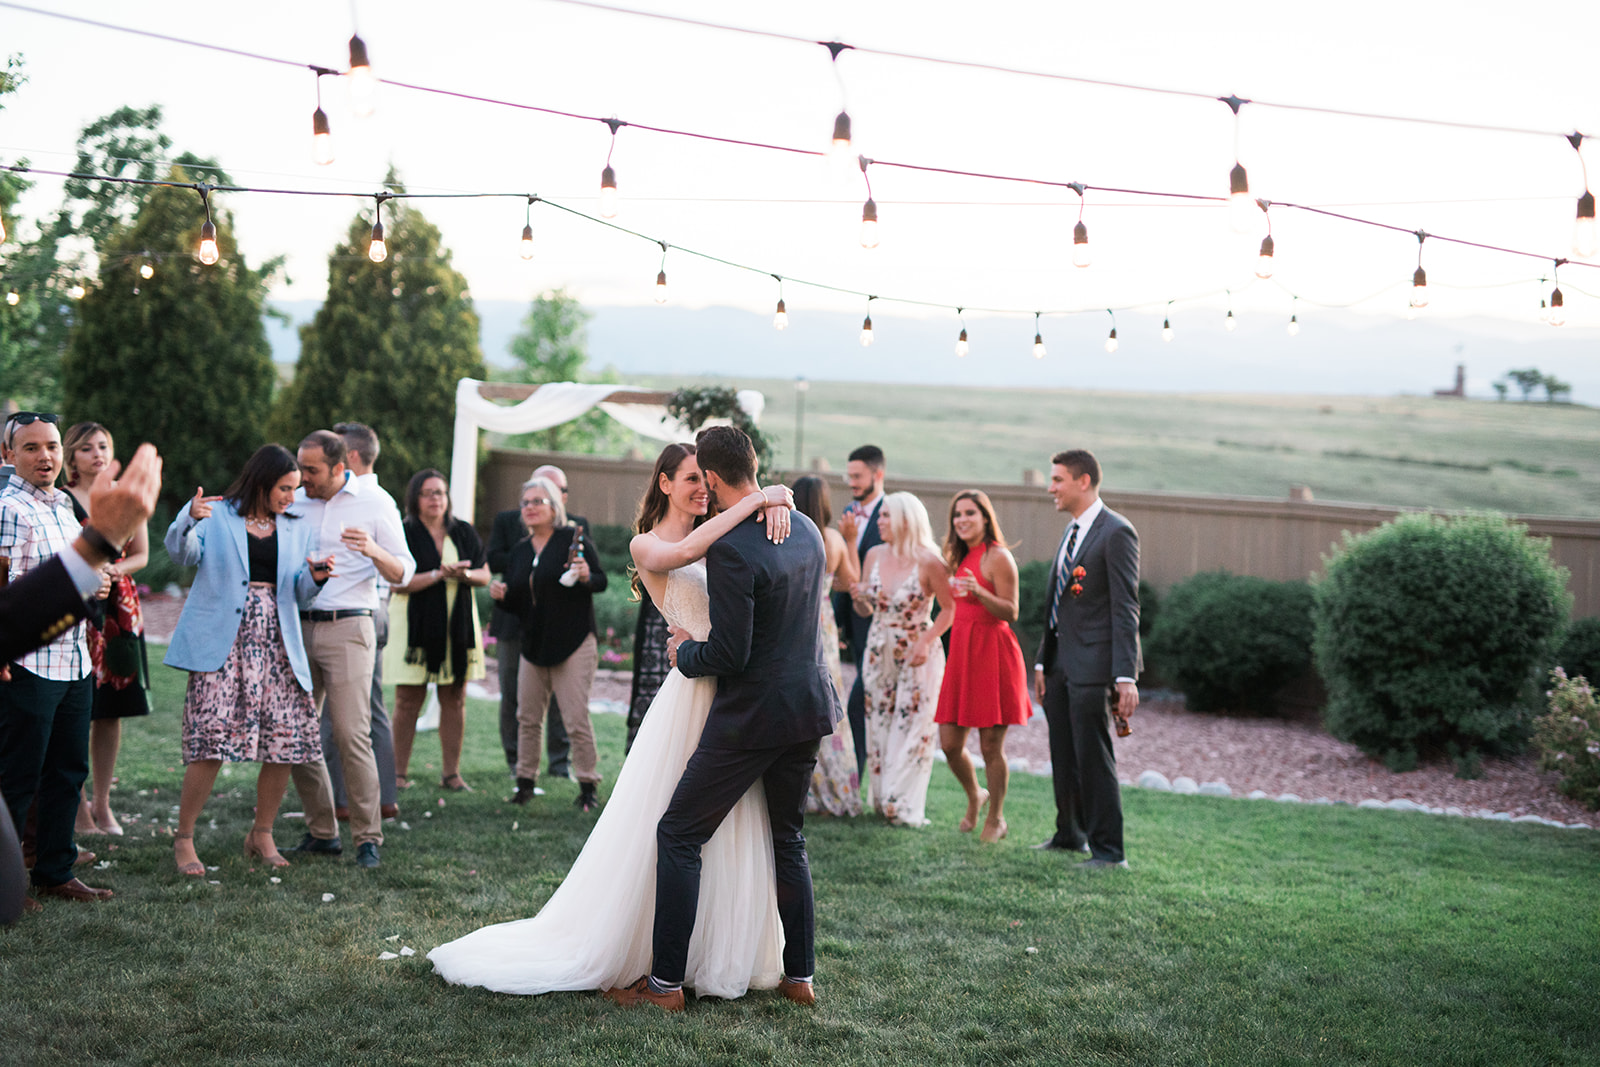 bride groom and guests dancing at intimate backyard wedding reception